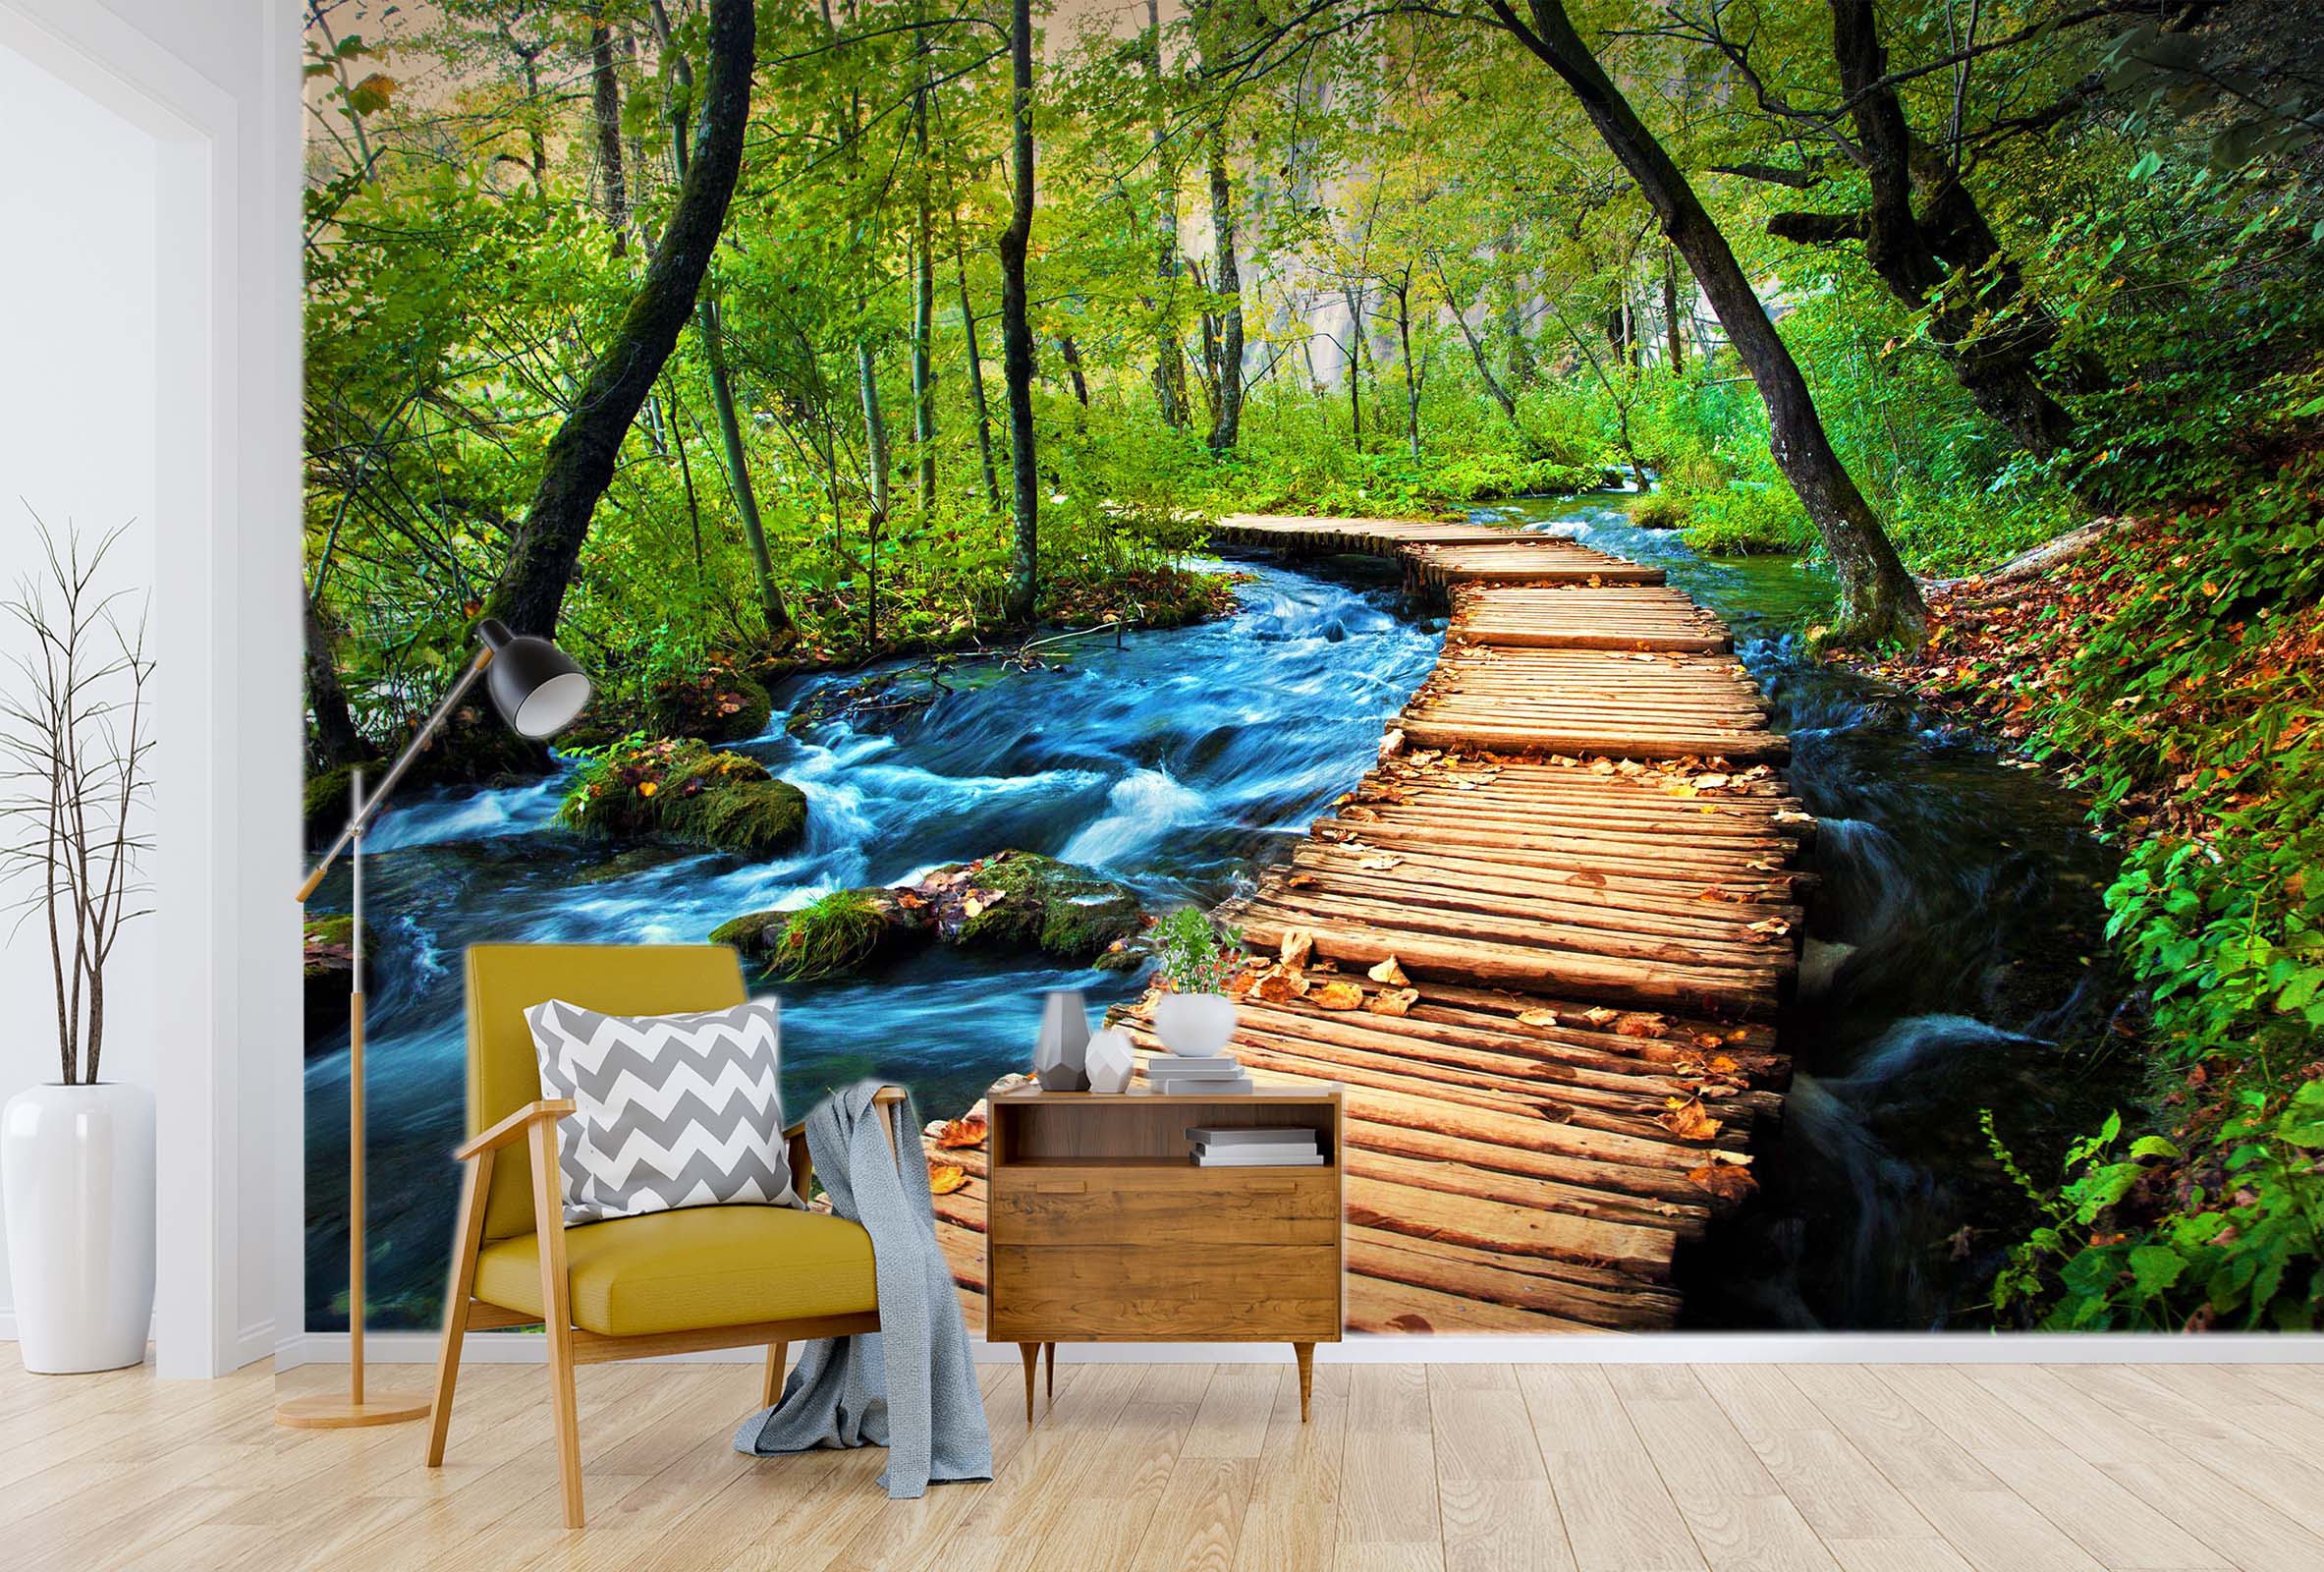 3D Waterfall Wooden Bridge 13 Wall Murals Wallpaper AJ Wallpaper 2 